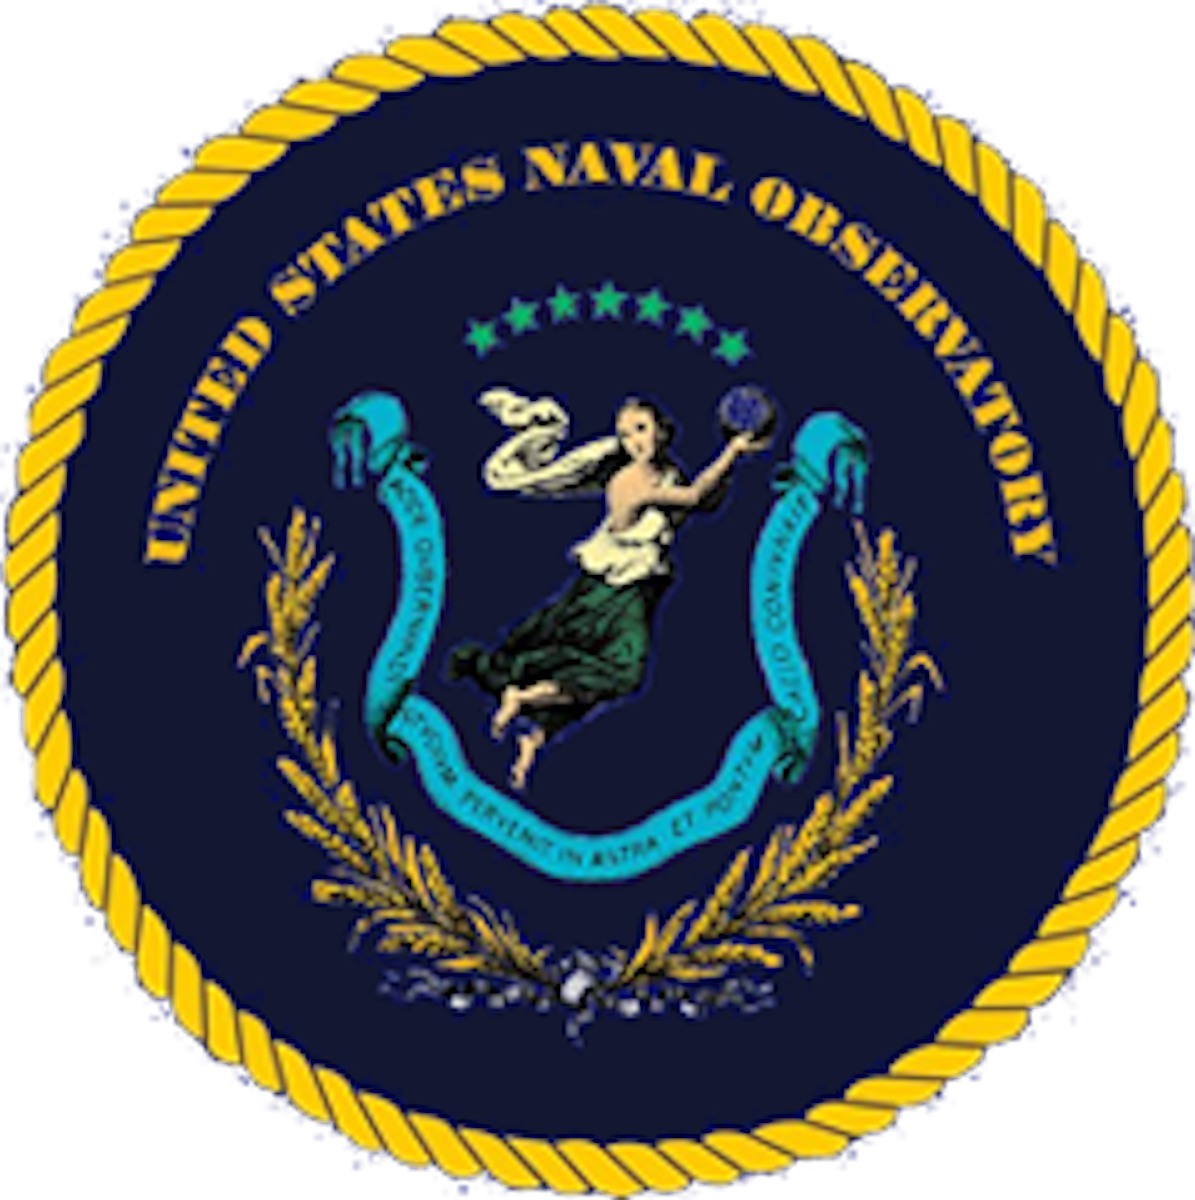 United States Naval Observatory logo